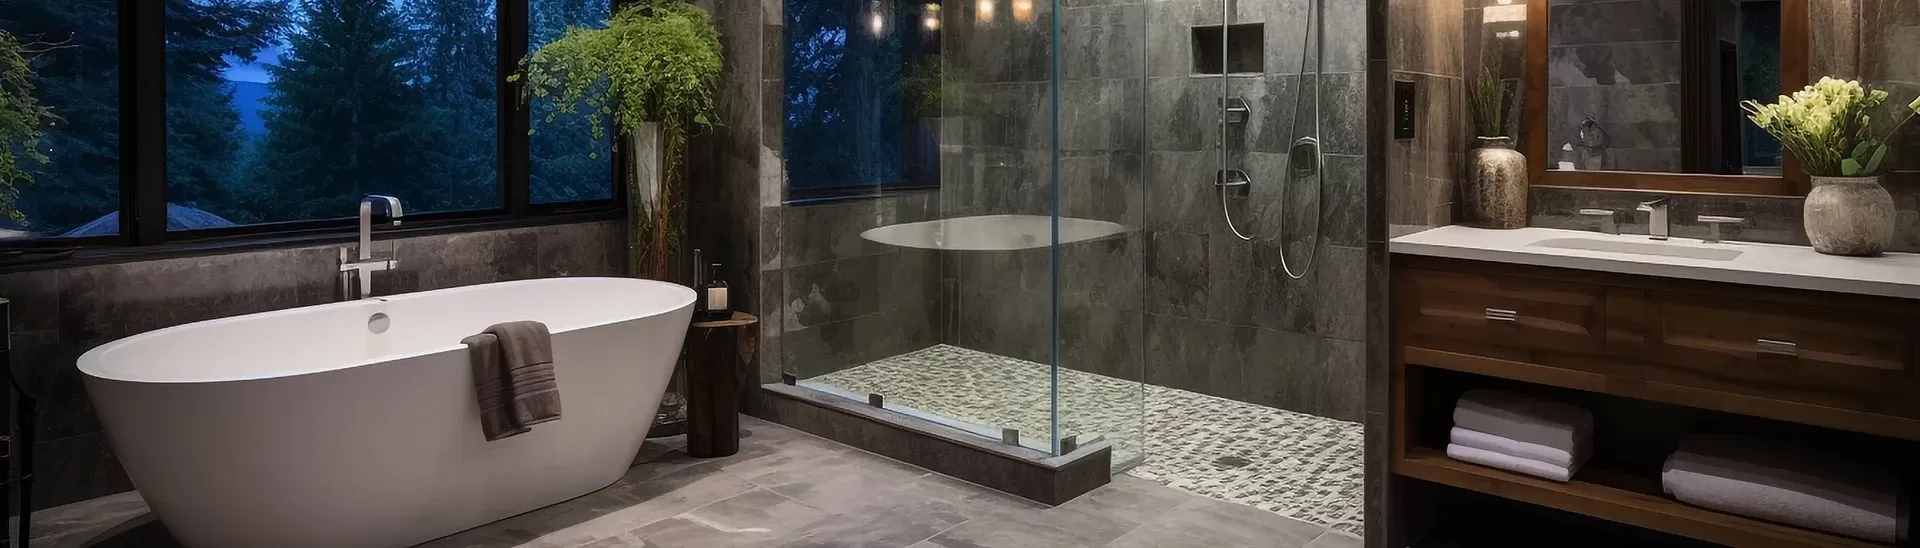 Bathroom Interior Designs: 11 Inspiring Ideas for an Appealing Home 